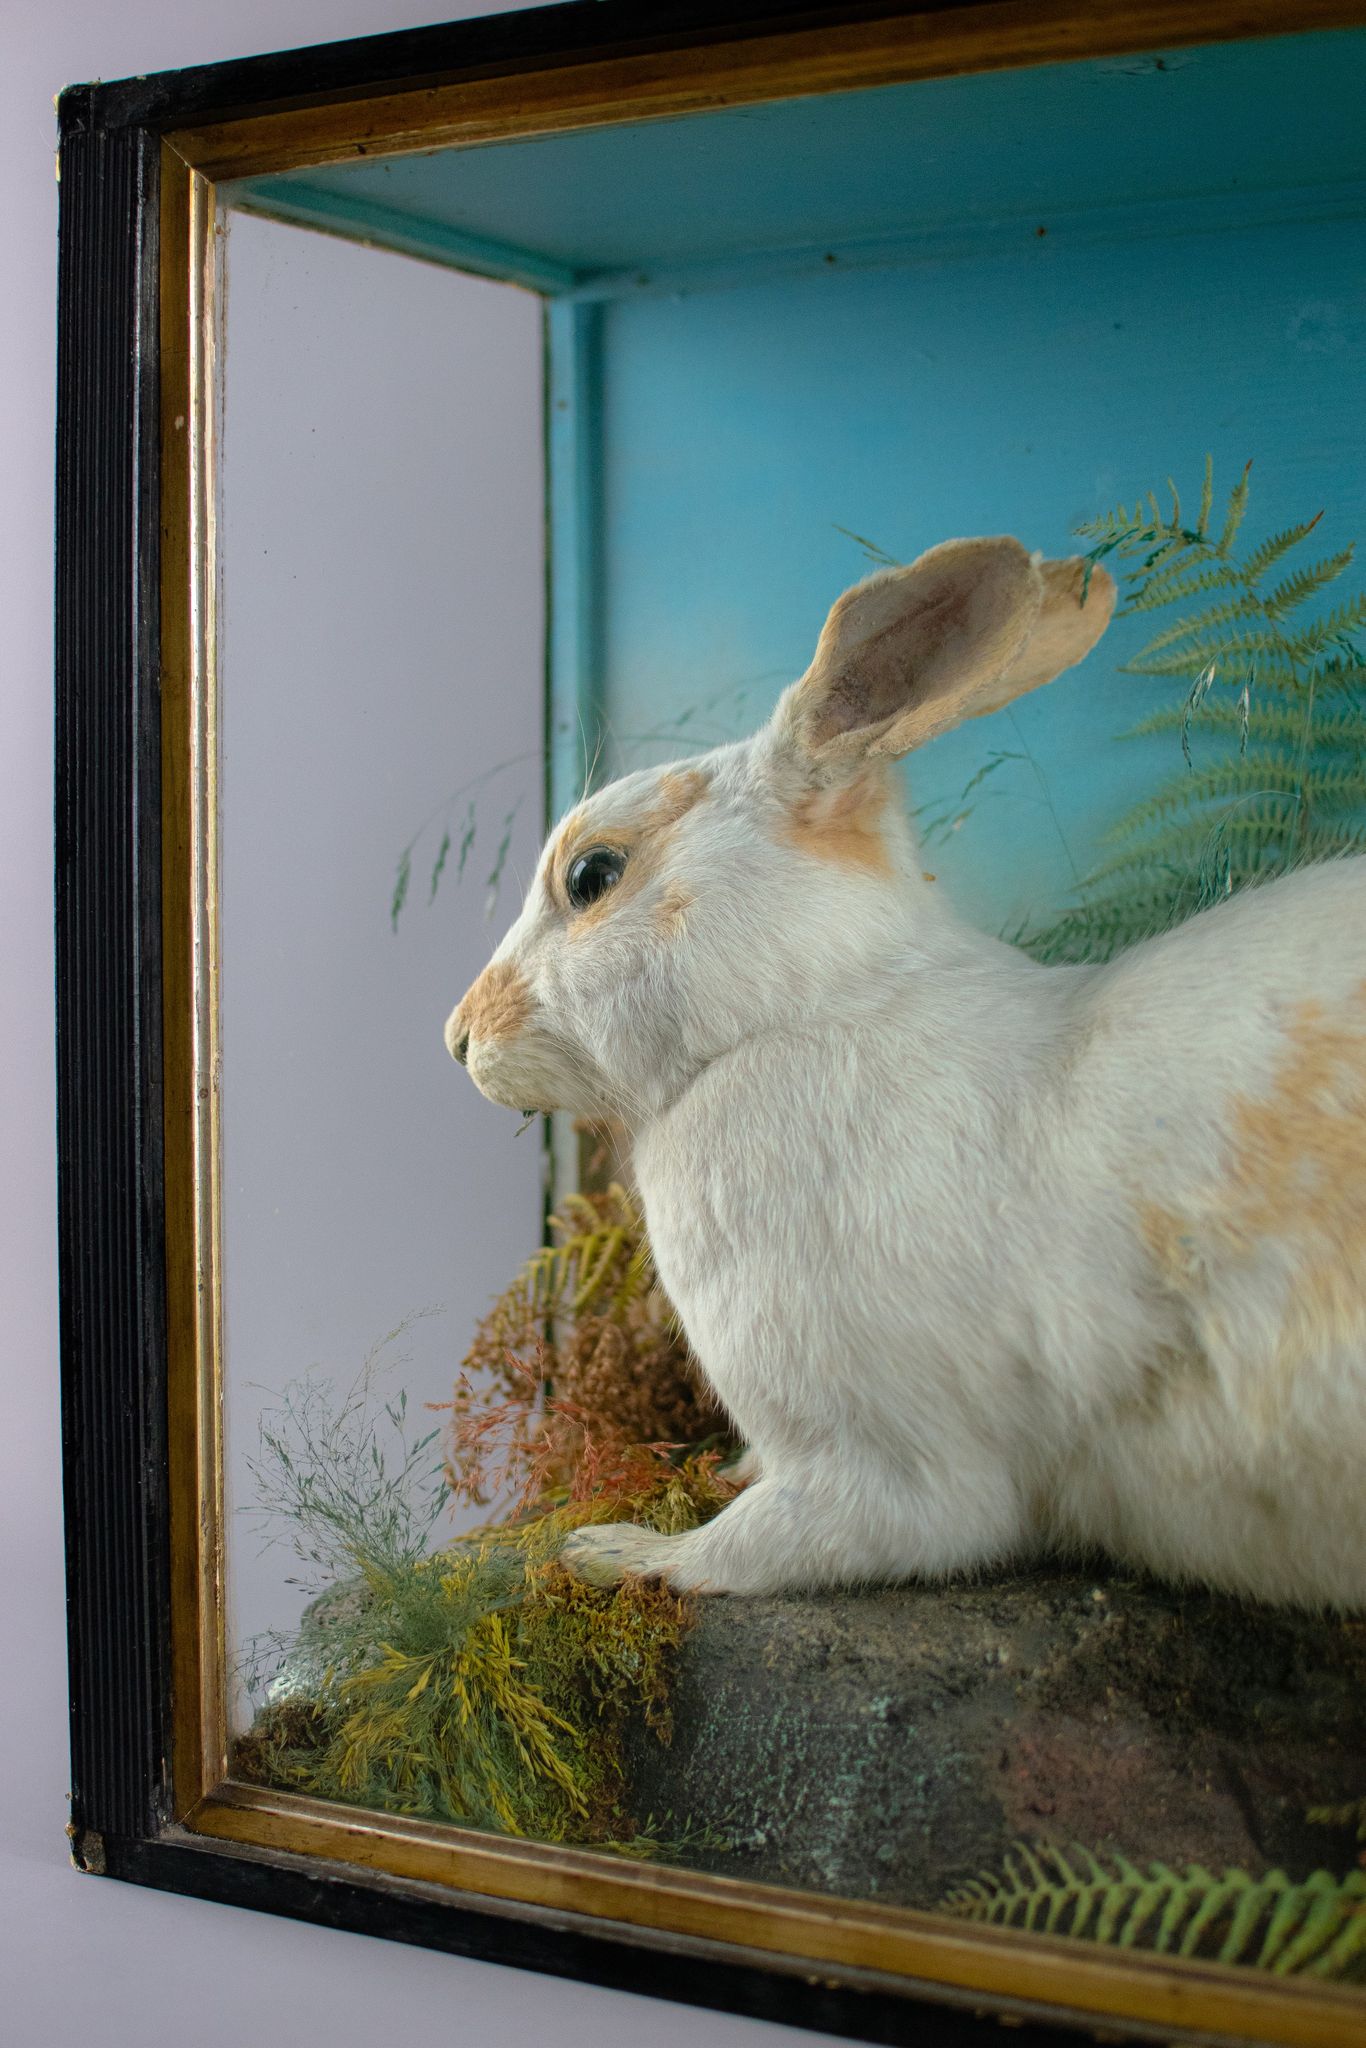 Victorian Taxidermy English Spot Rabbit by Jefferies of Carmarthen